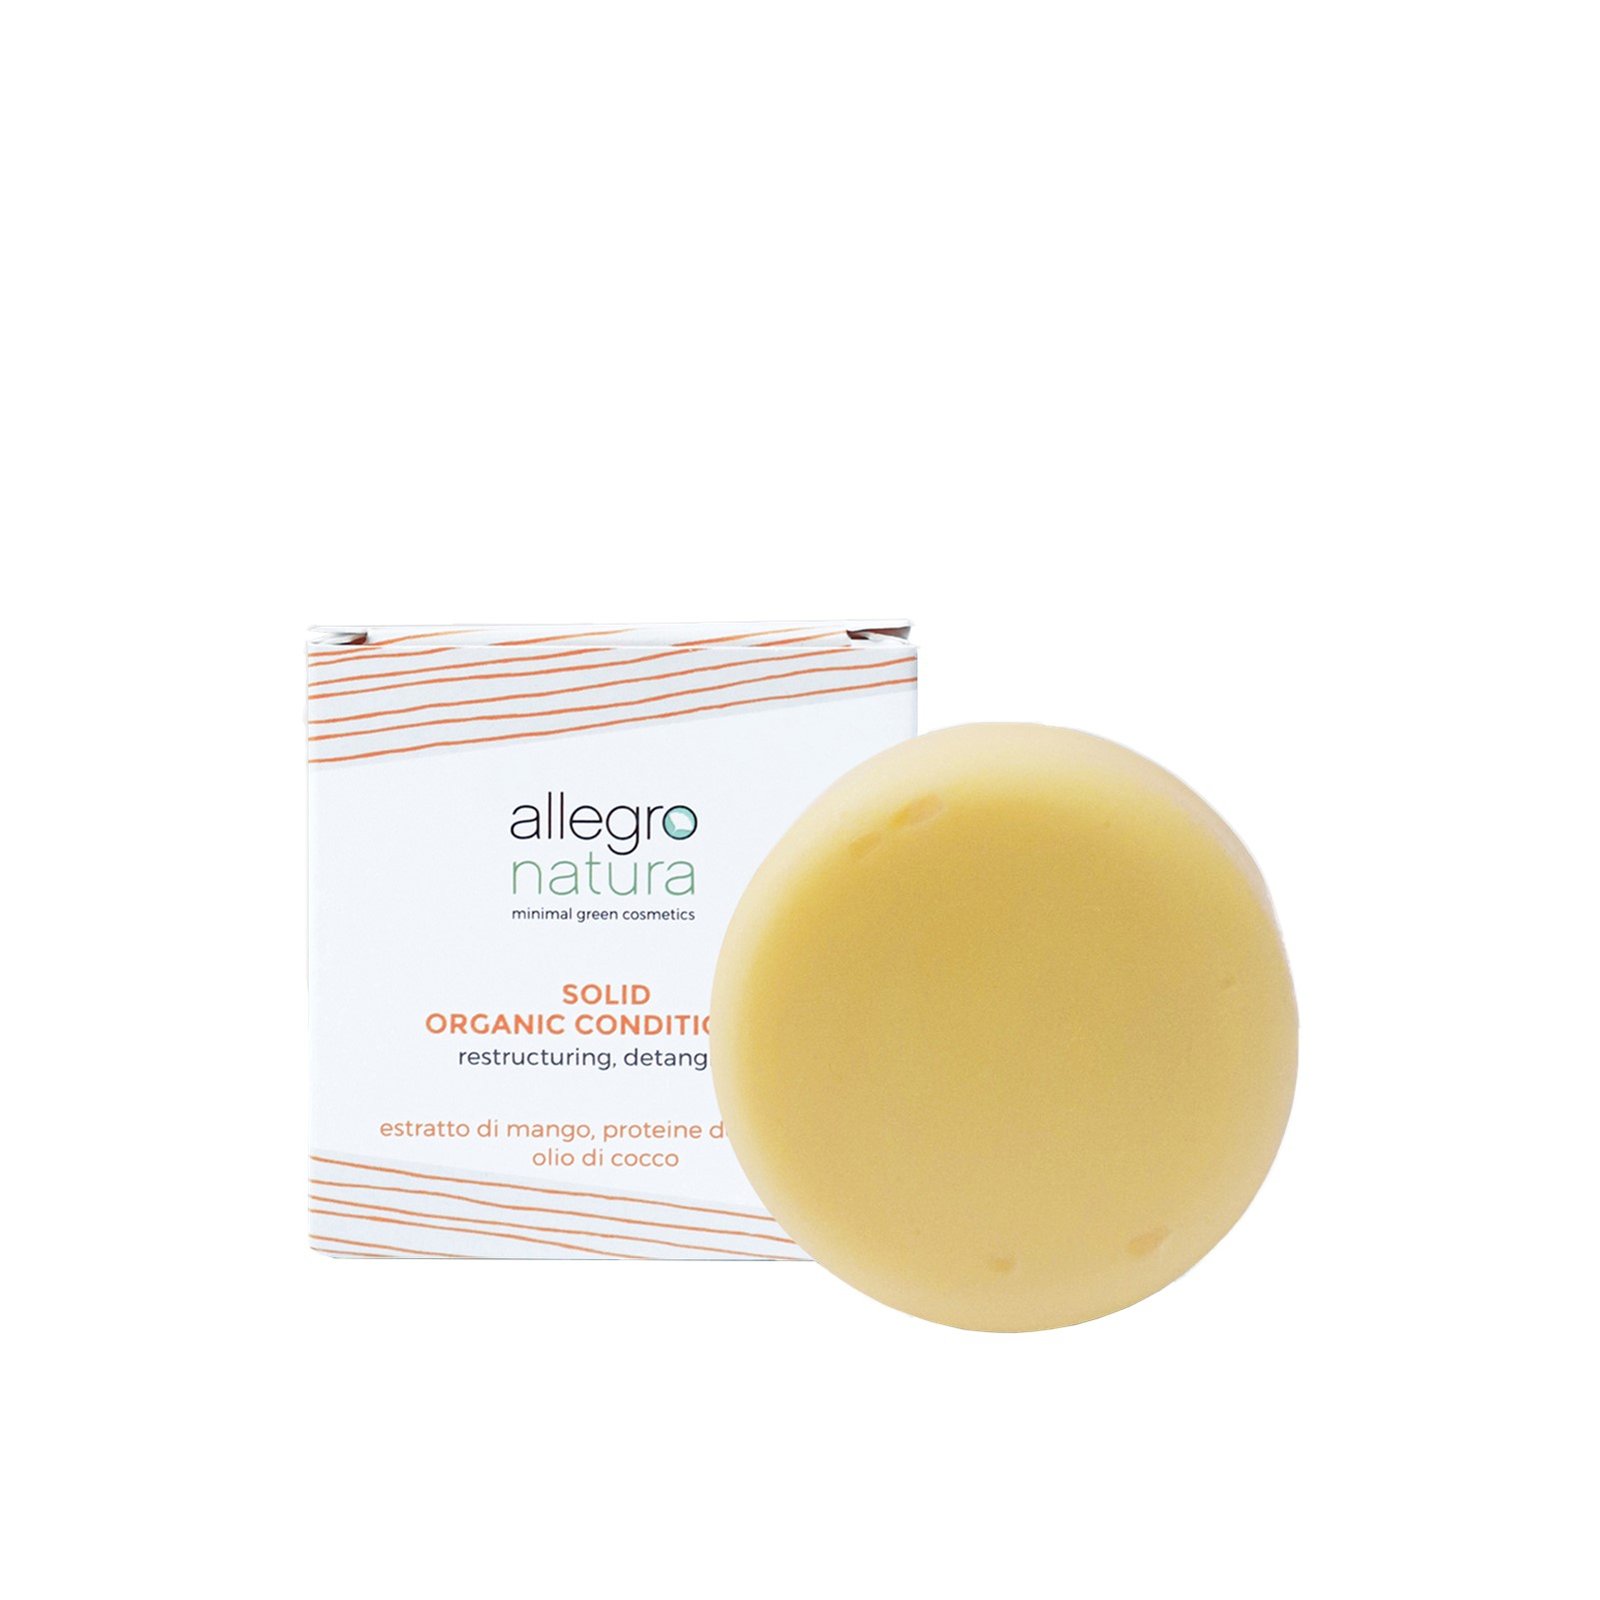 Allegro Natura Solid Organic Conditioner 65g (2.29 oz)